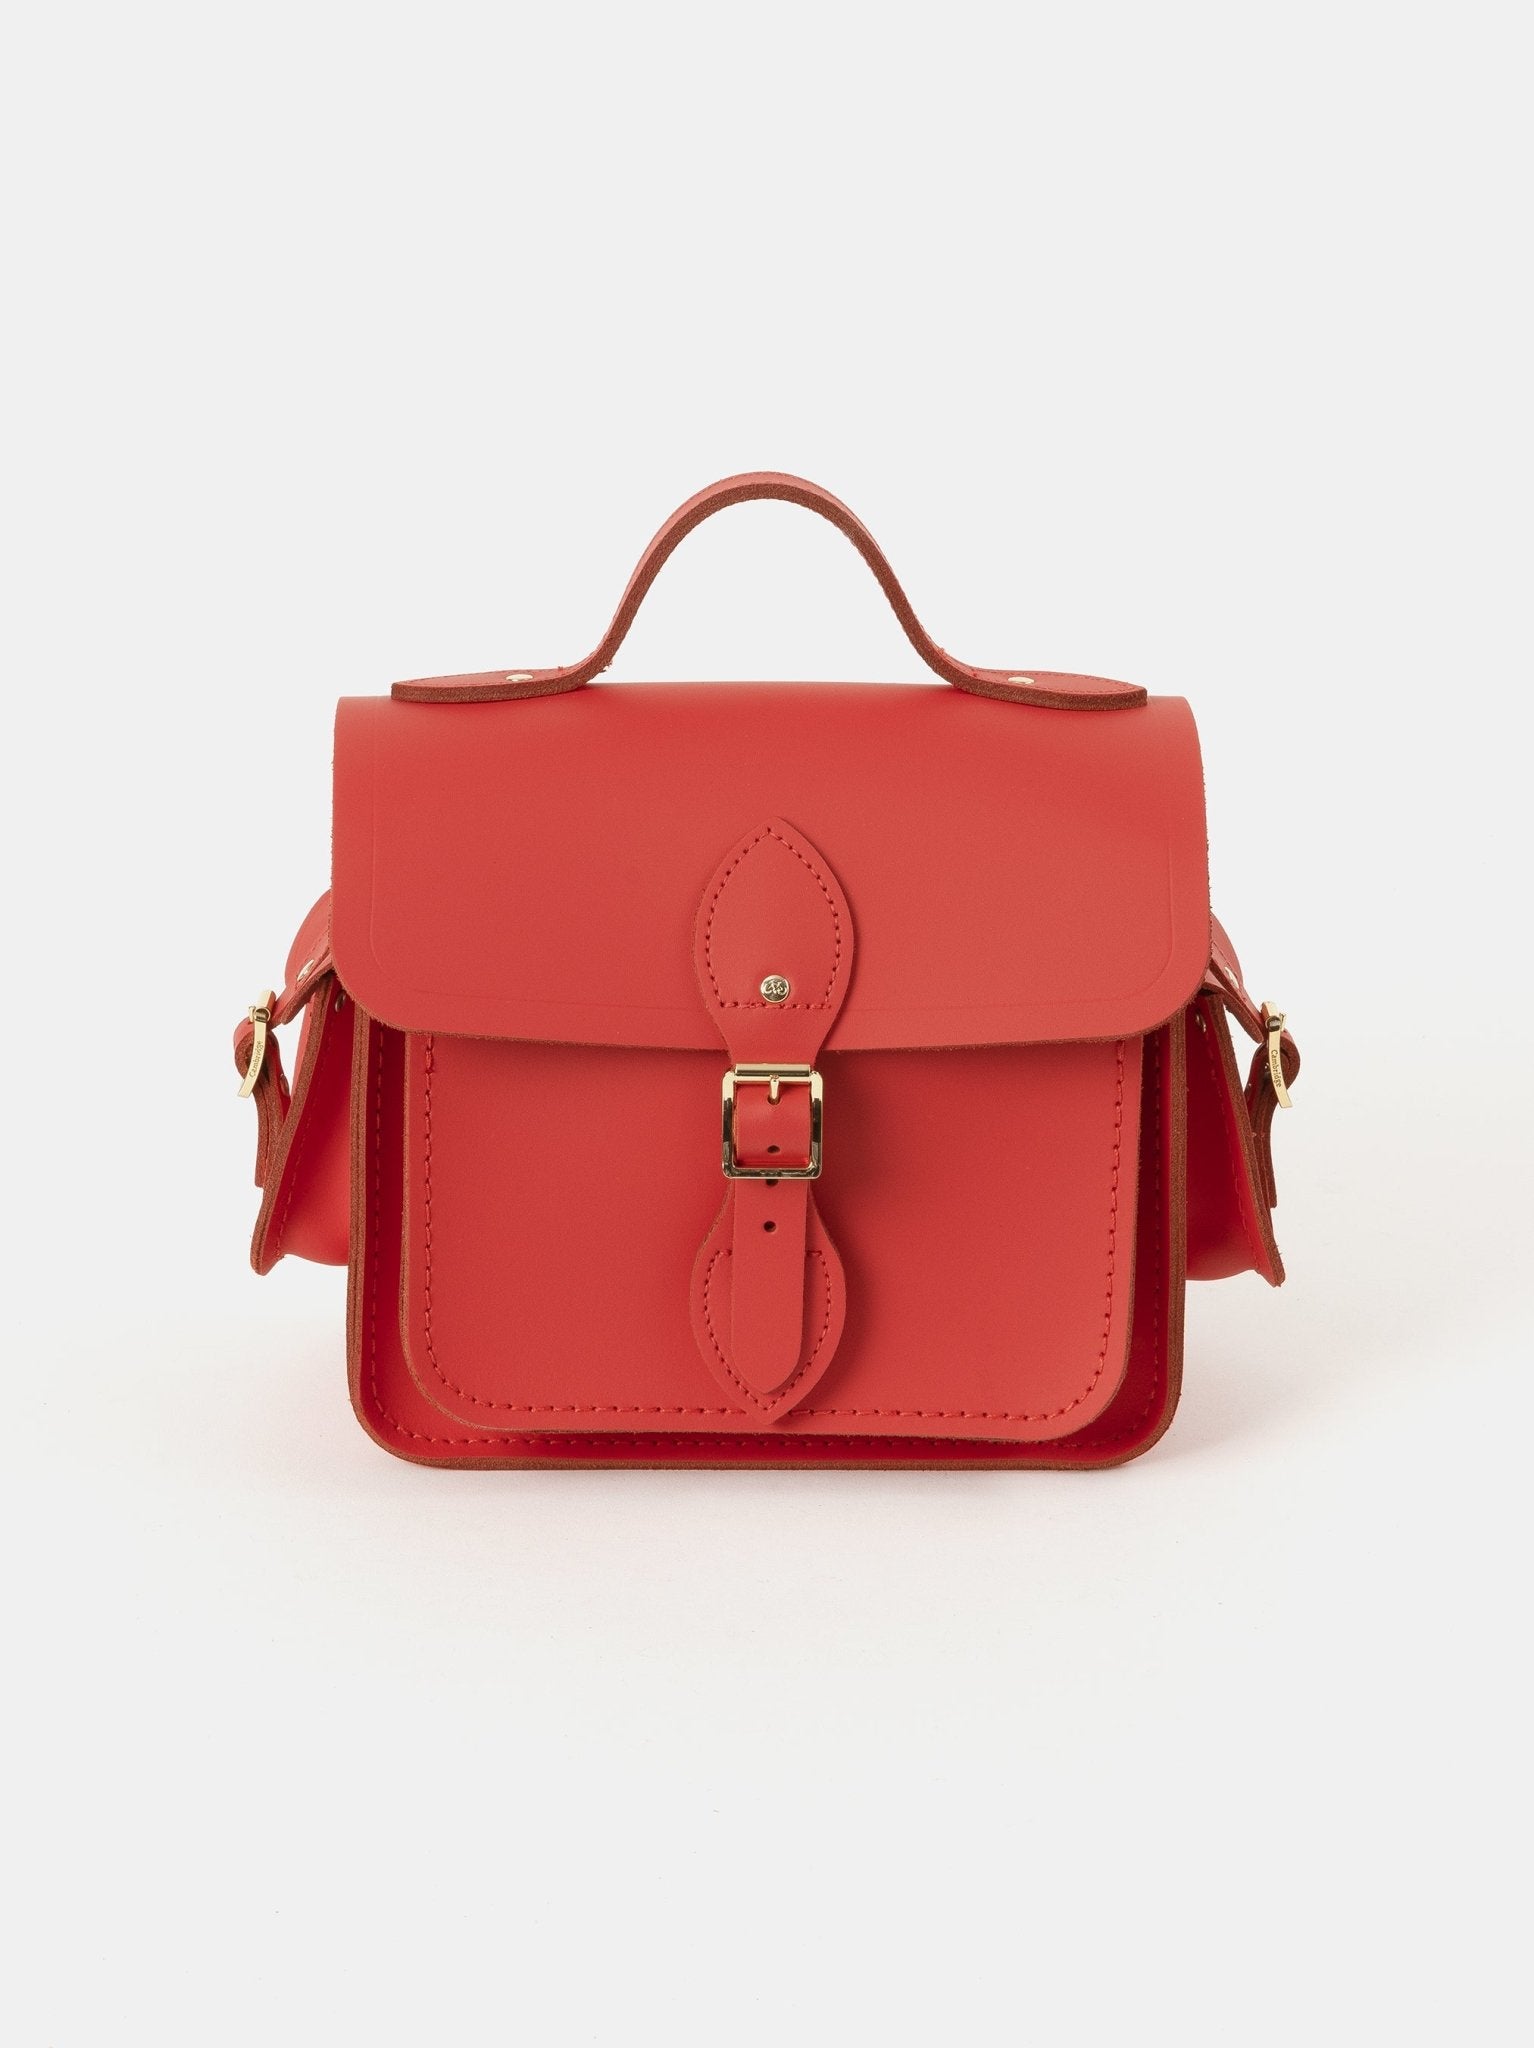 The Cambridge Satchel Co. Unisex Red Bag product